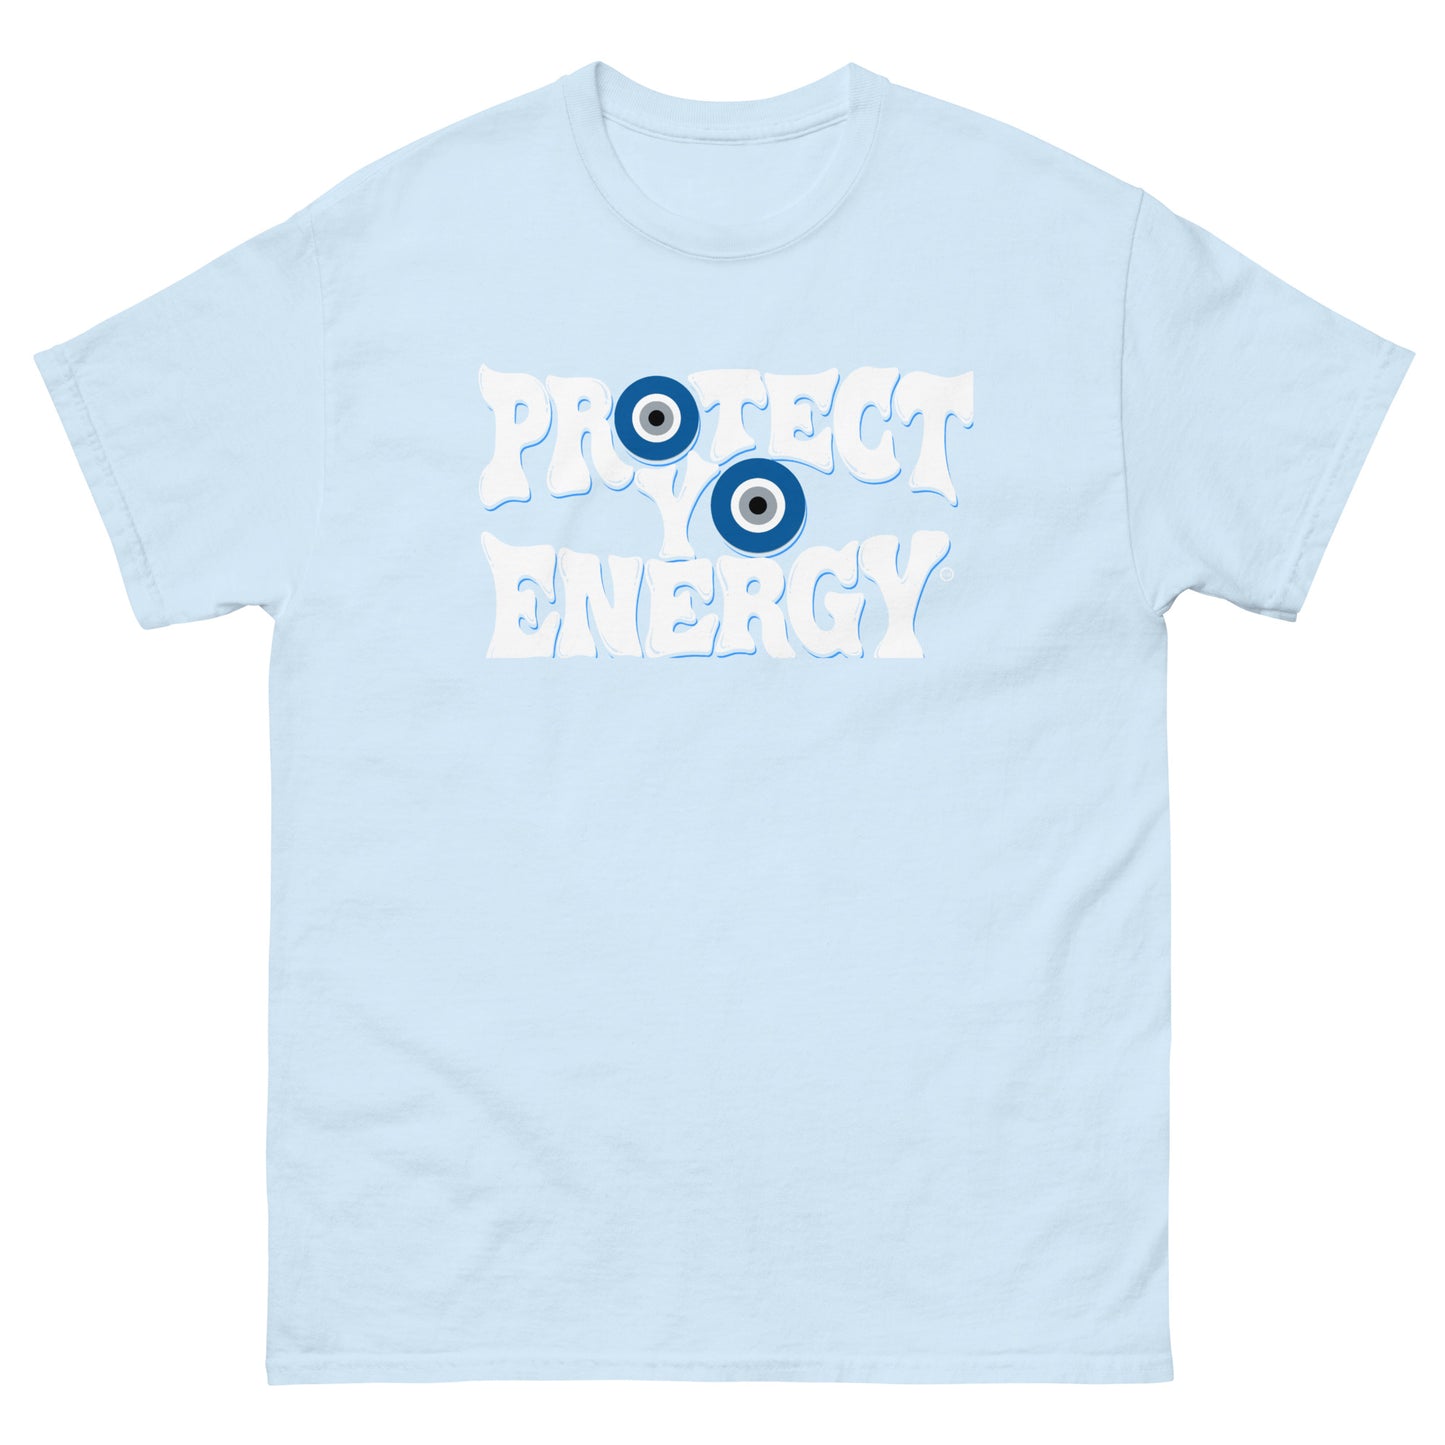 Evil Eye classic tee - PROTECT YO ENERGY 